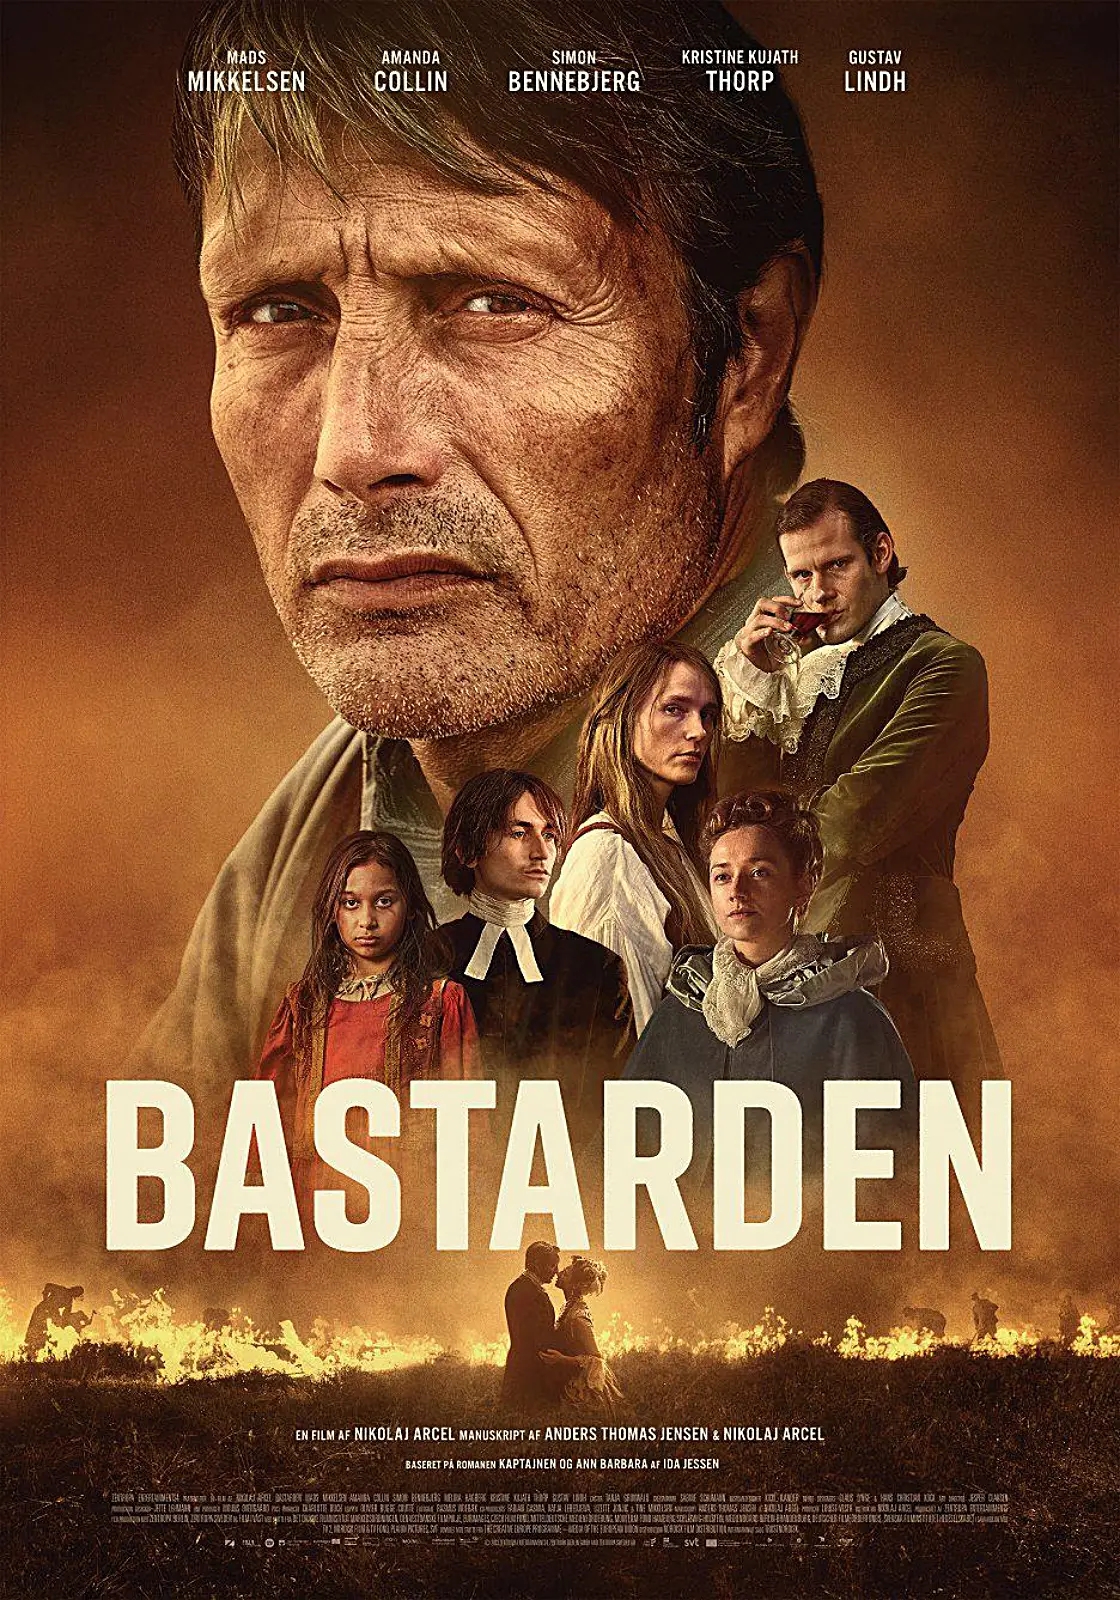 Bastarden,荒蕪之地應許之心,應許之地,惡棍,杂种,the Promised Land,海報,poster